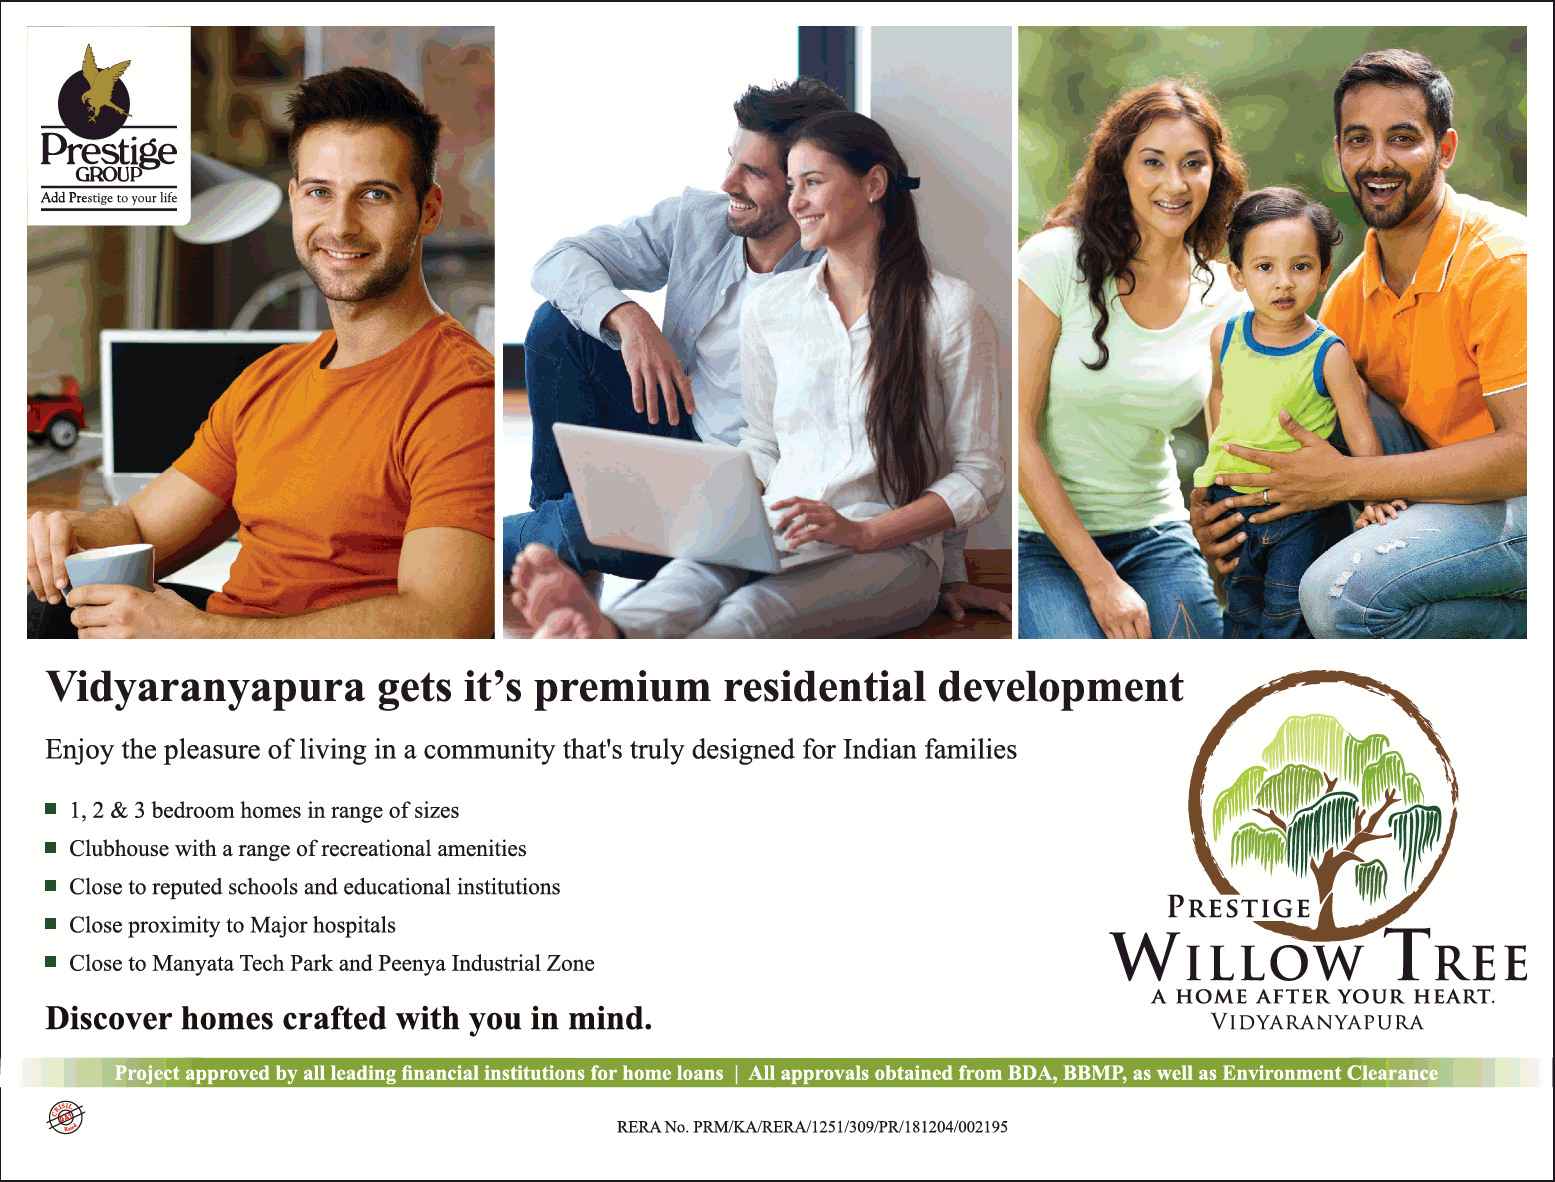 Book 1/2/3 premium homes at Prestige Willow Tree in Vidyaranyapura, Bangalore